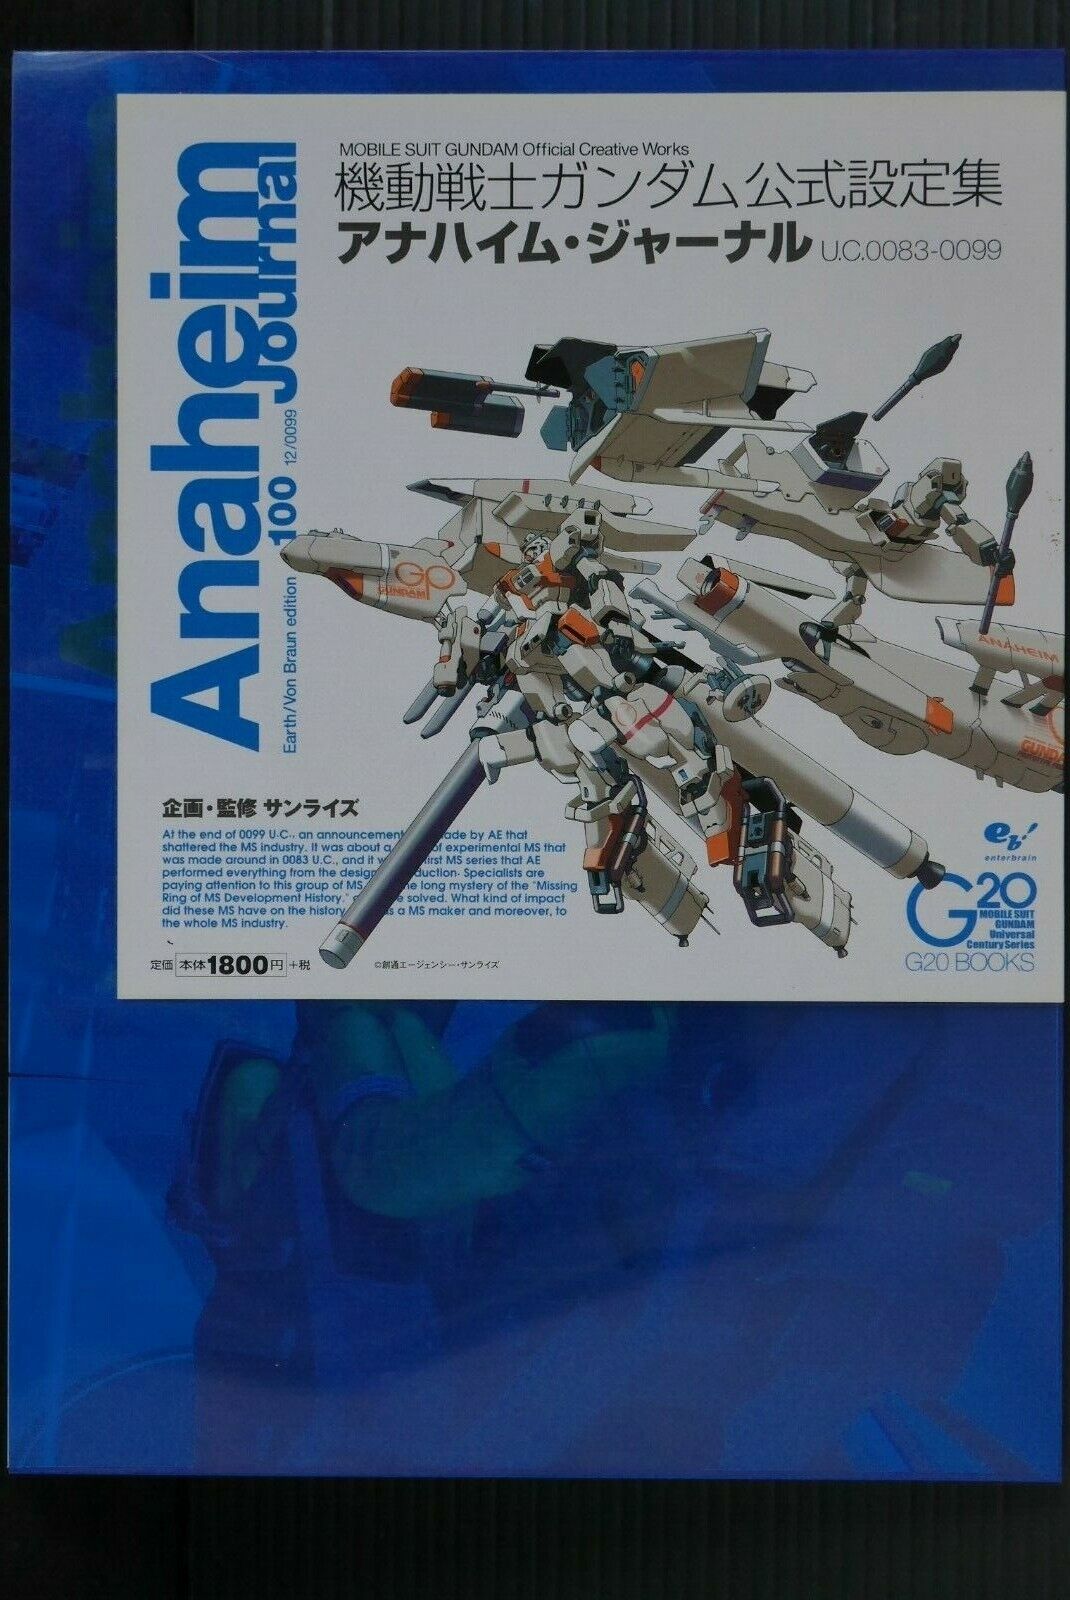 JAPAN Mobile Suit Gundam Official Creative Works Anaheim Journal U.C.0083-0099